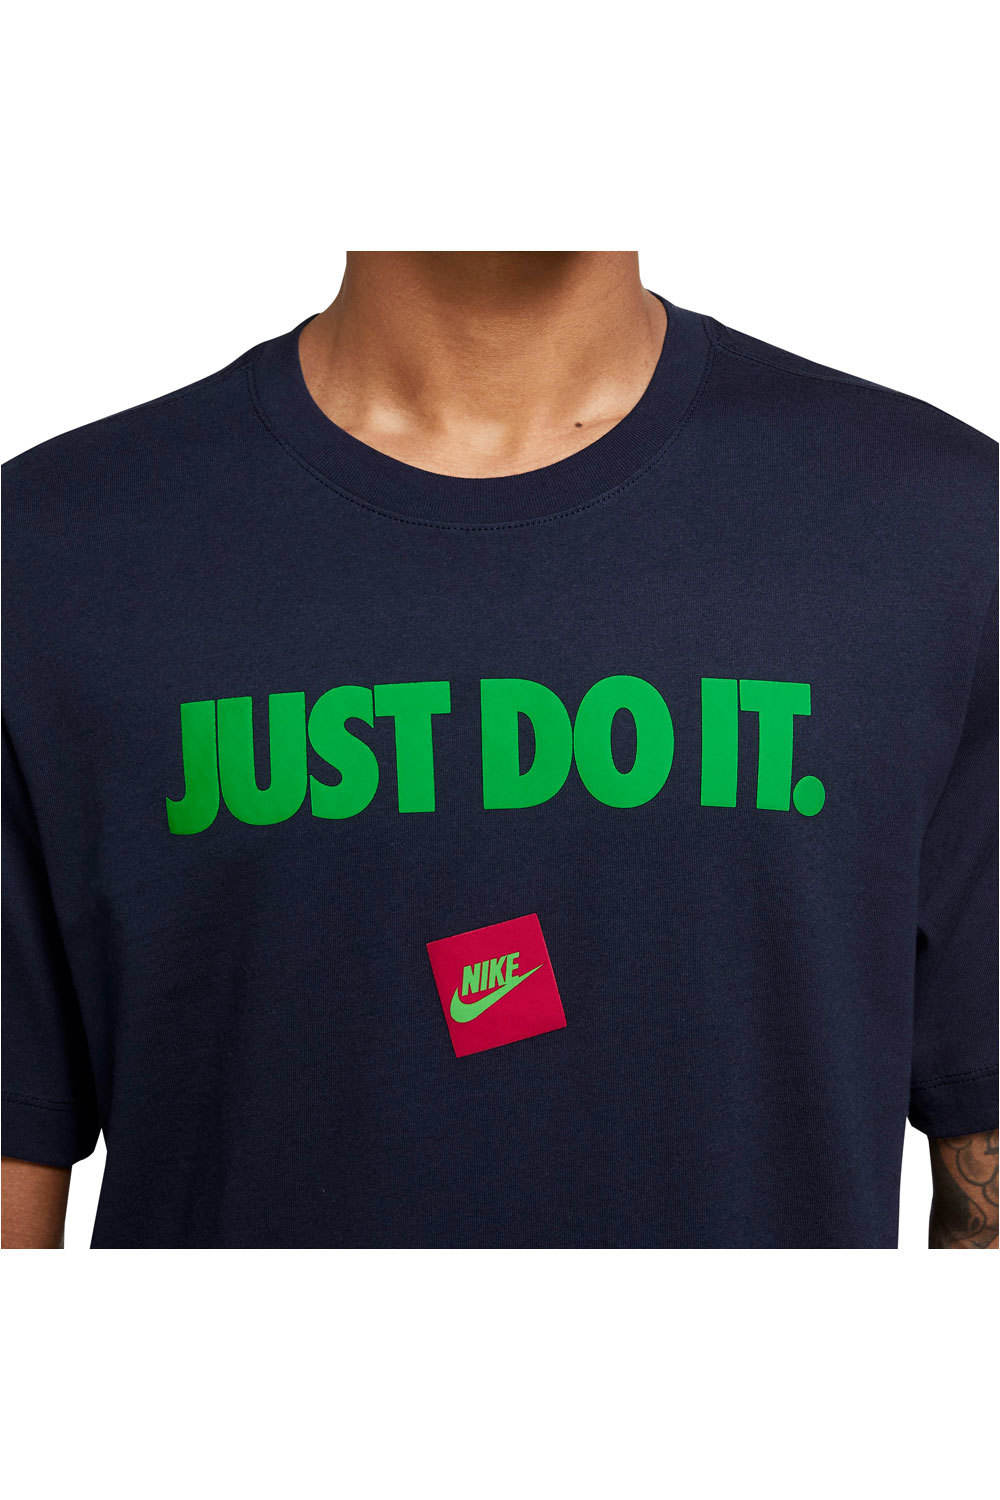 Nike camiseta manga corta hombre M NSW TEE JDI 12 MONTH vista detalle